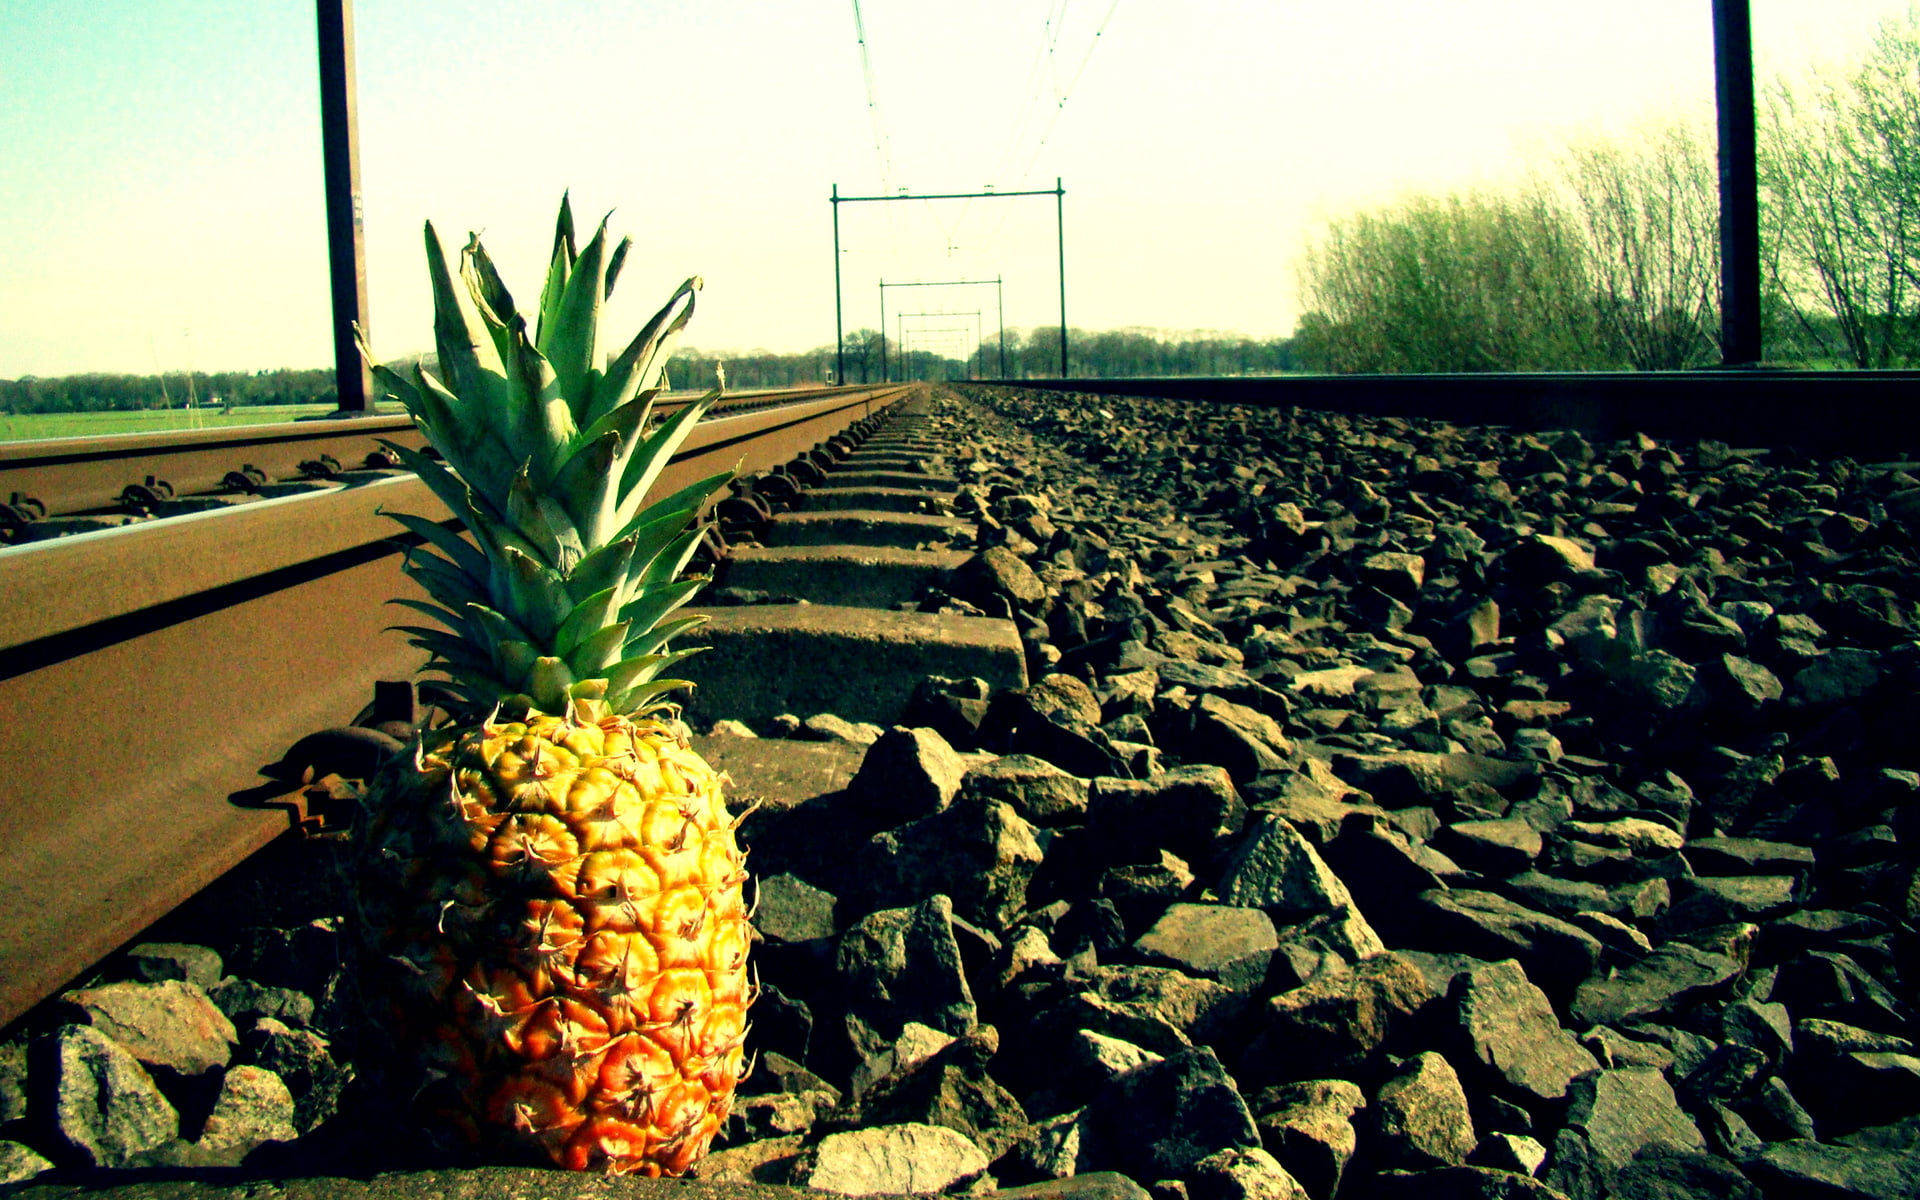 yellow and green pineapple fruit, pineapples, railway, fruit